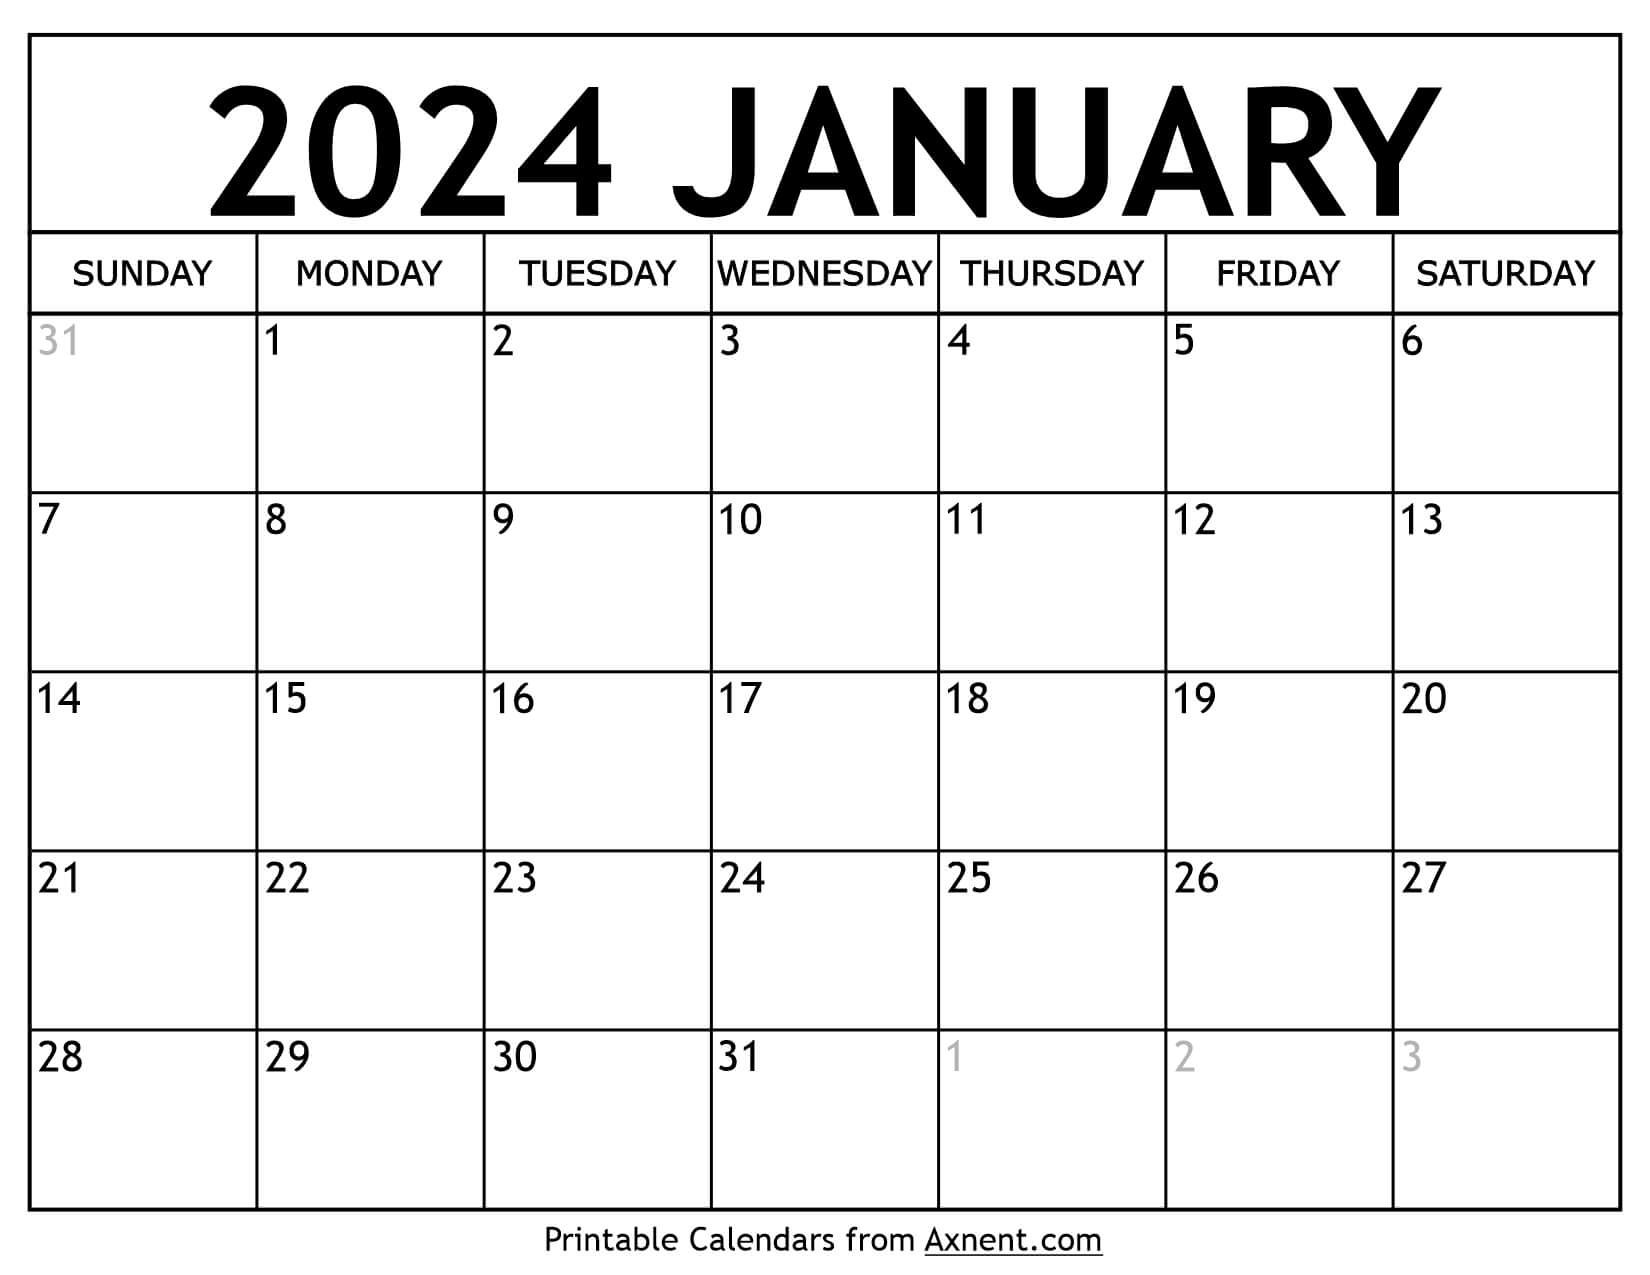 Printable January 2024 Calendar Template - Print Now for Calendar Printable 2024 January